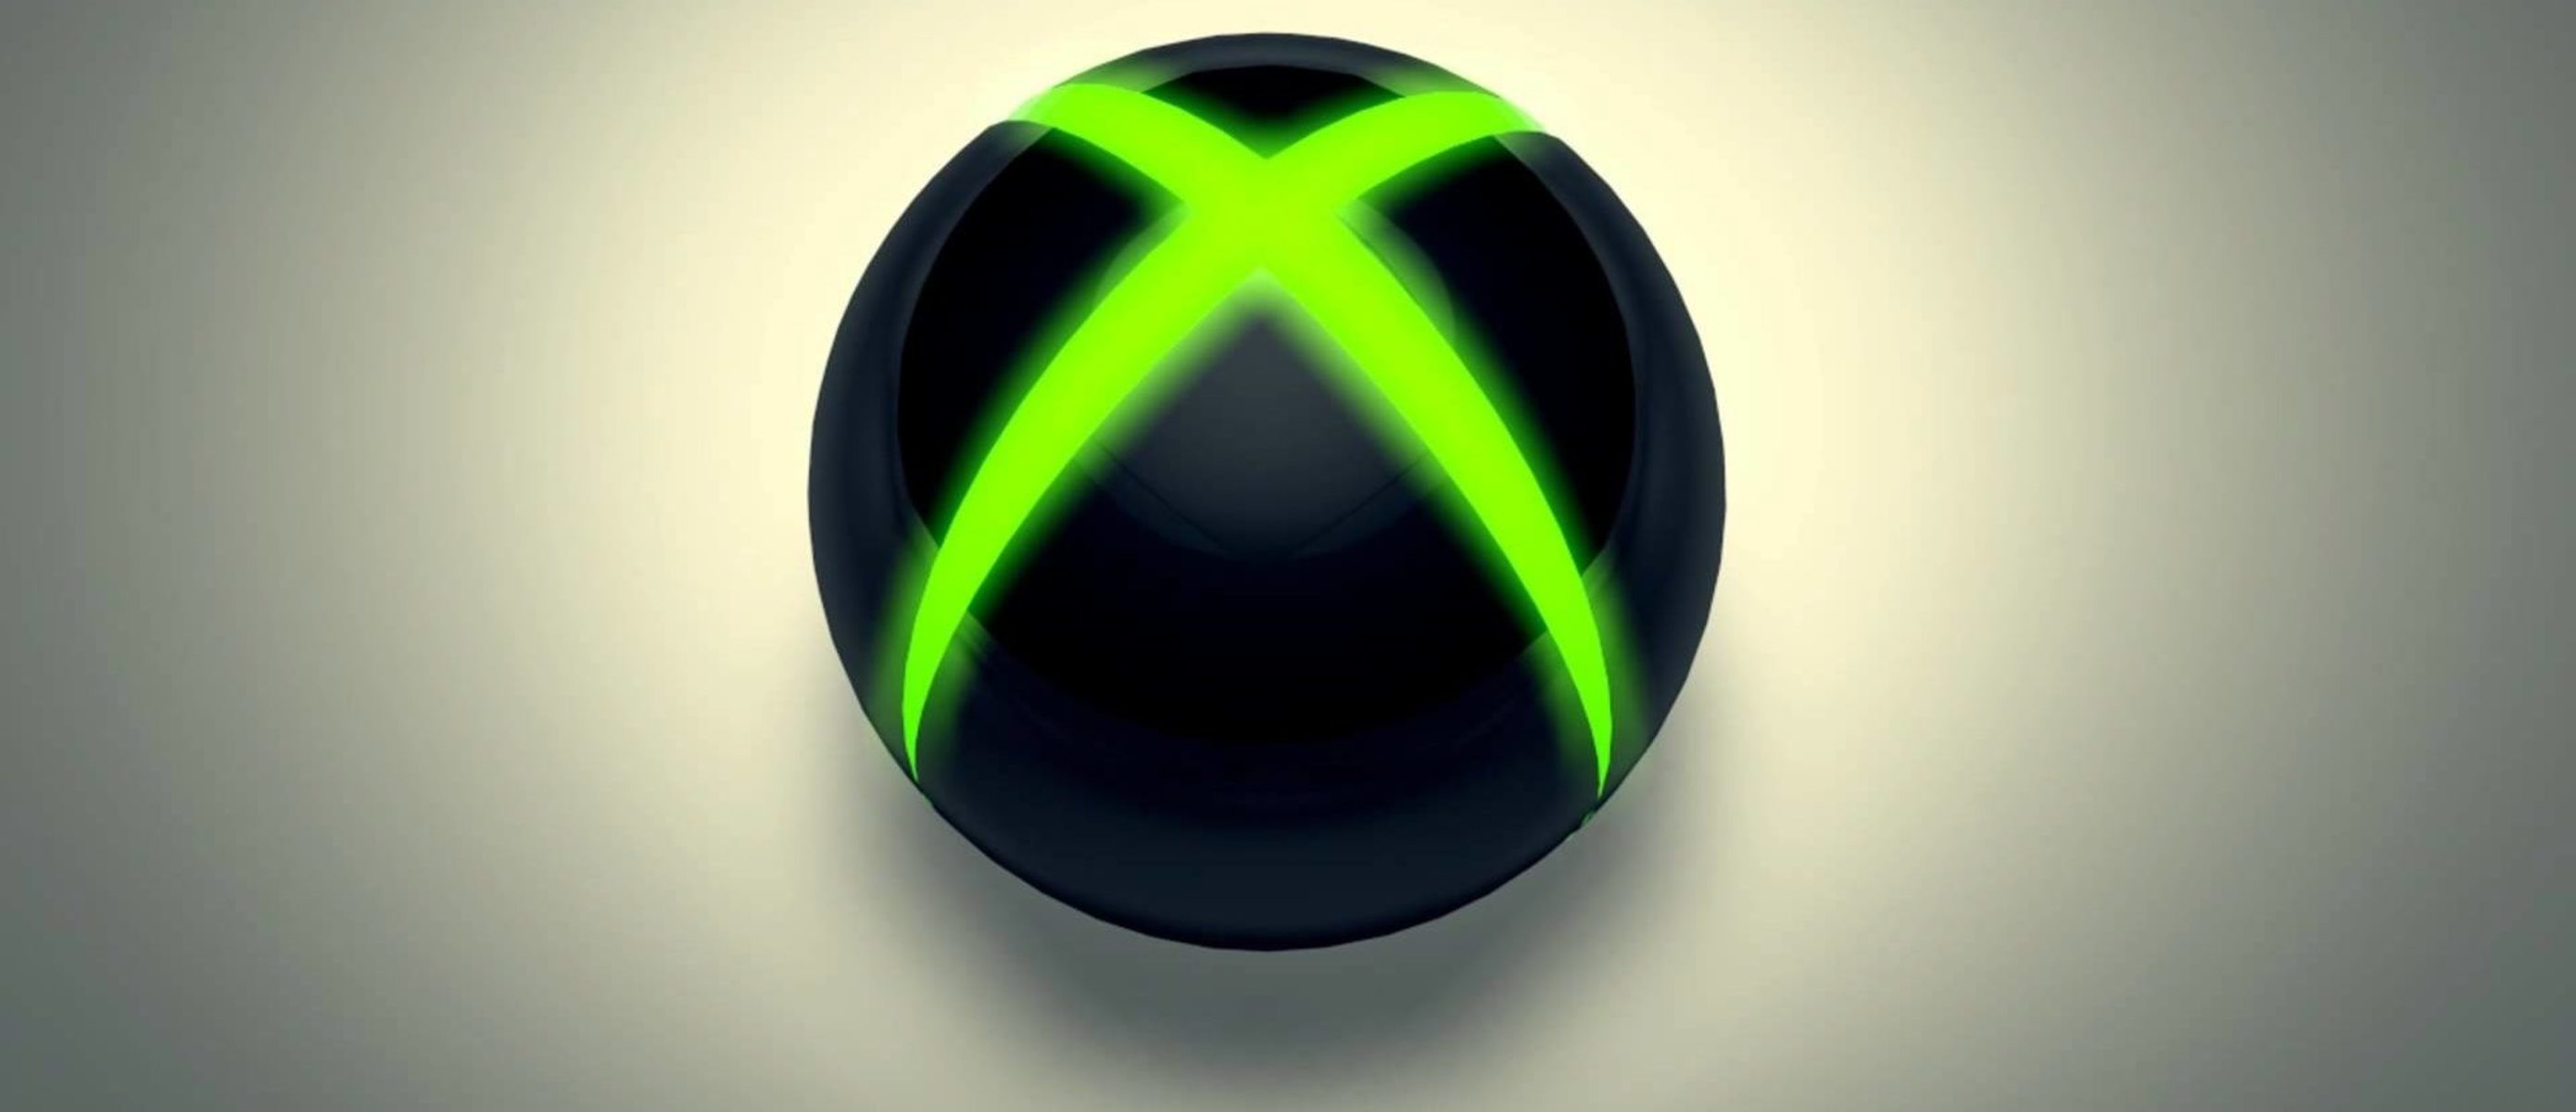 Аватарки xbox. Xbox 360. Xbox 360 logo.